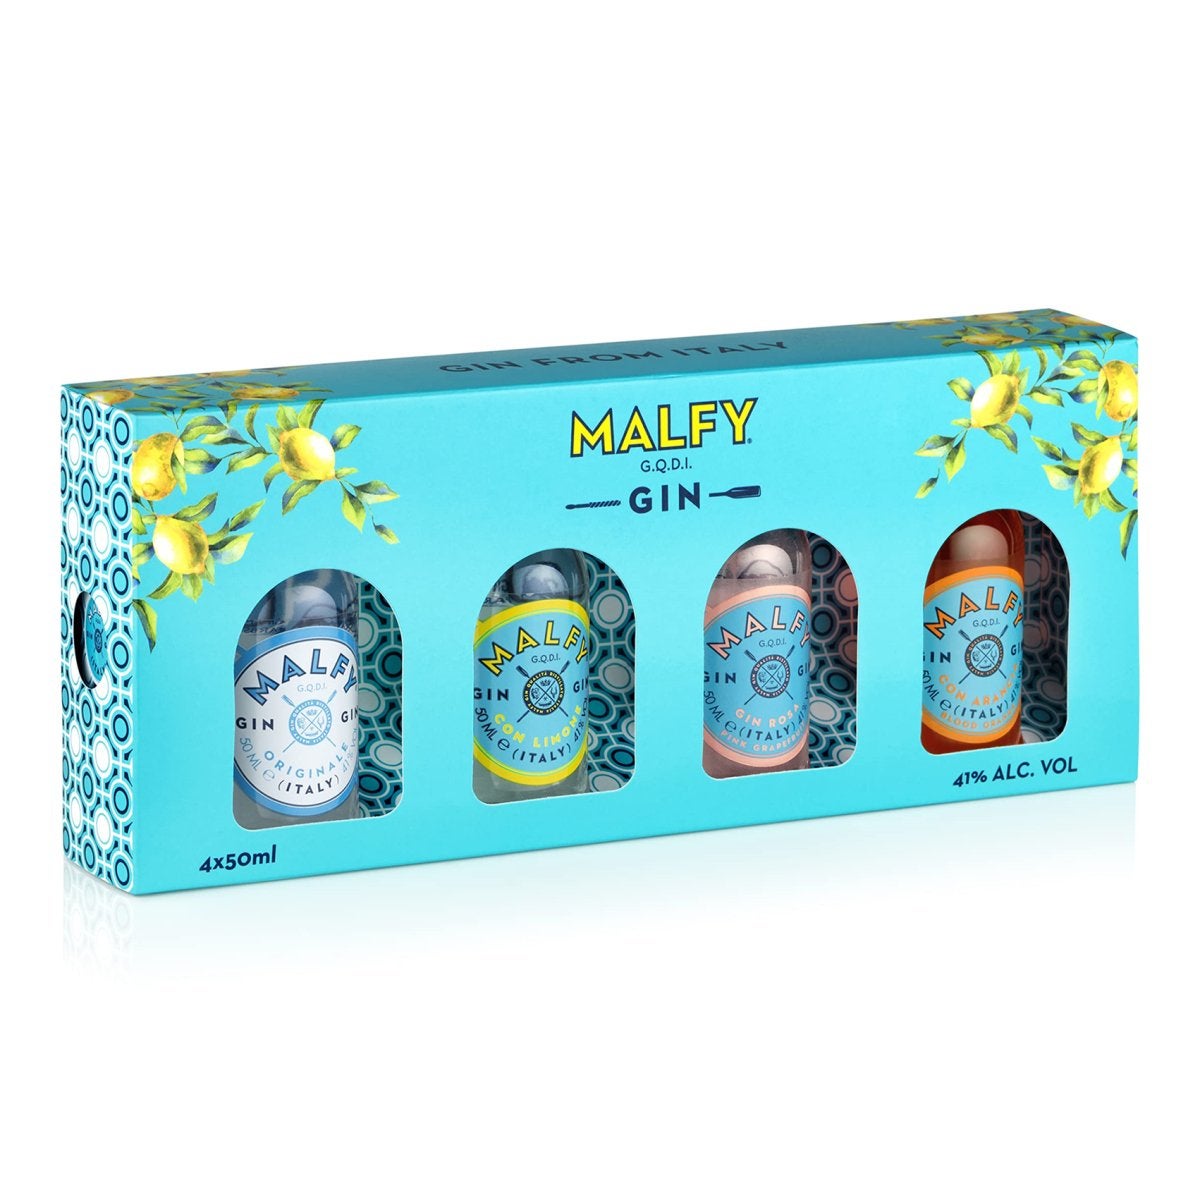 Malfy Gin Miniature Gift Tasting Pack - Italian Flavoured Gins